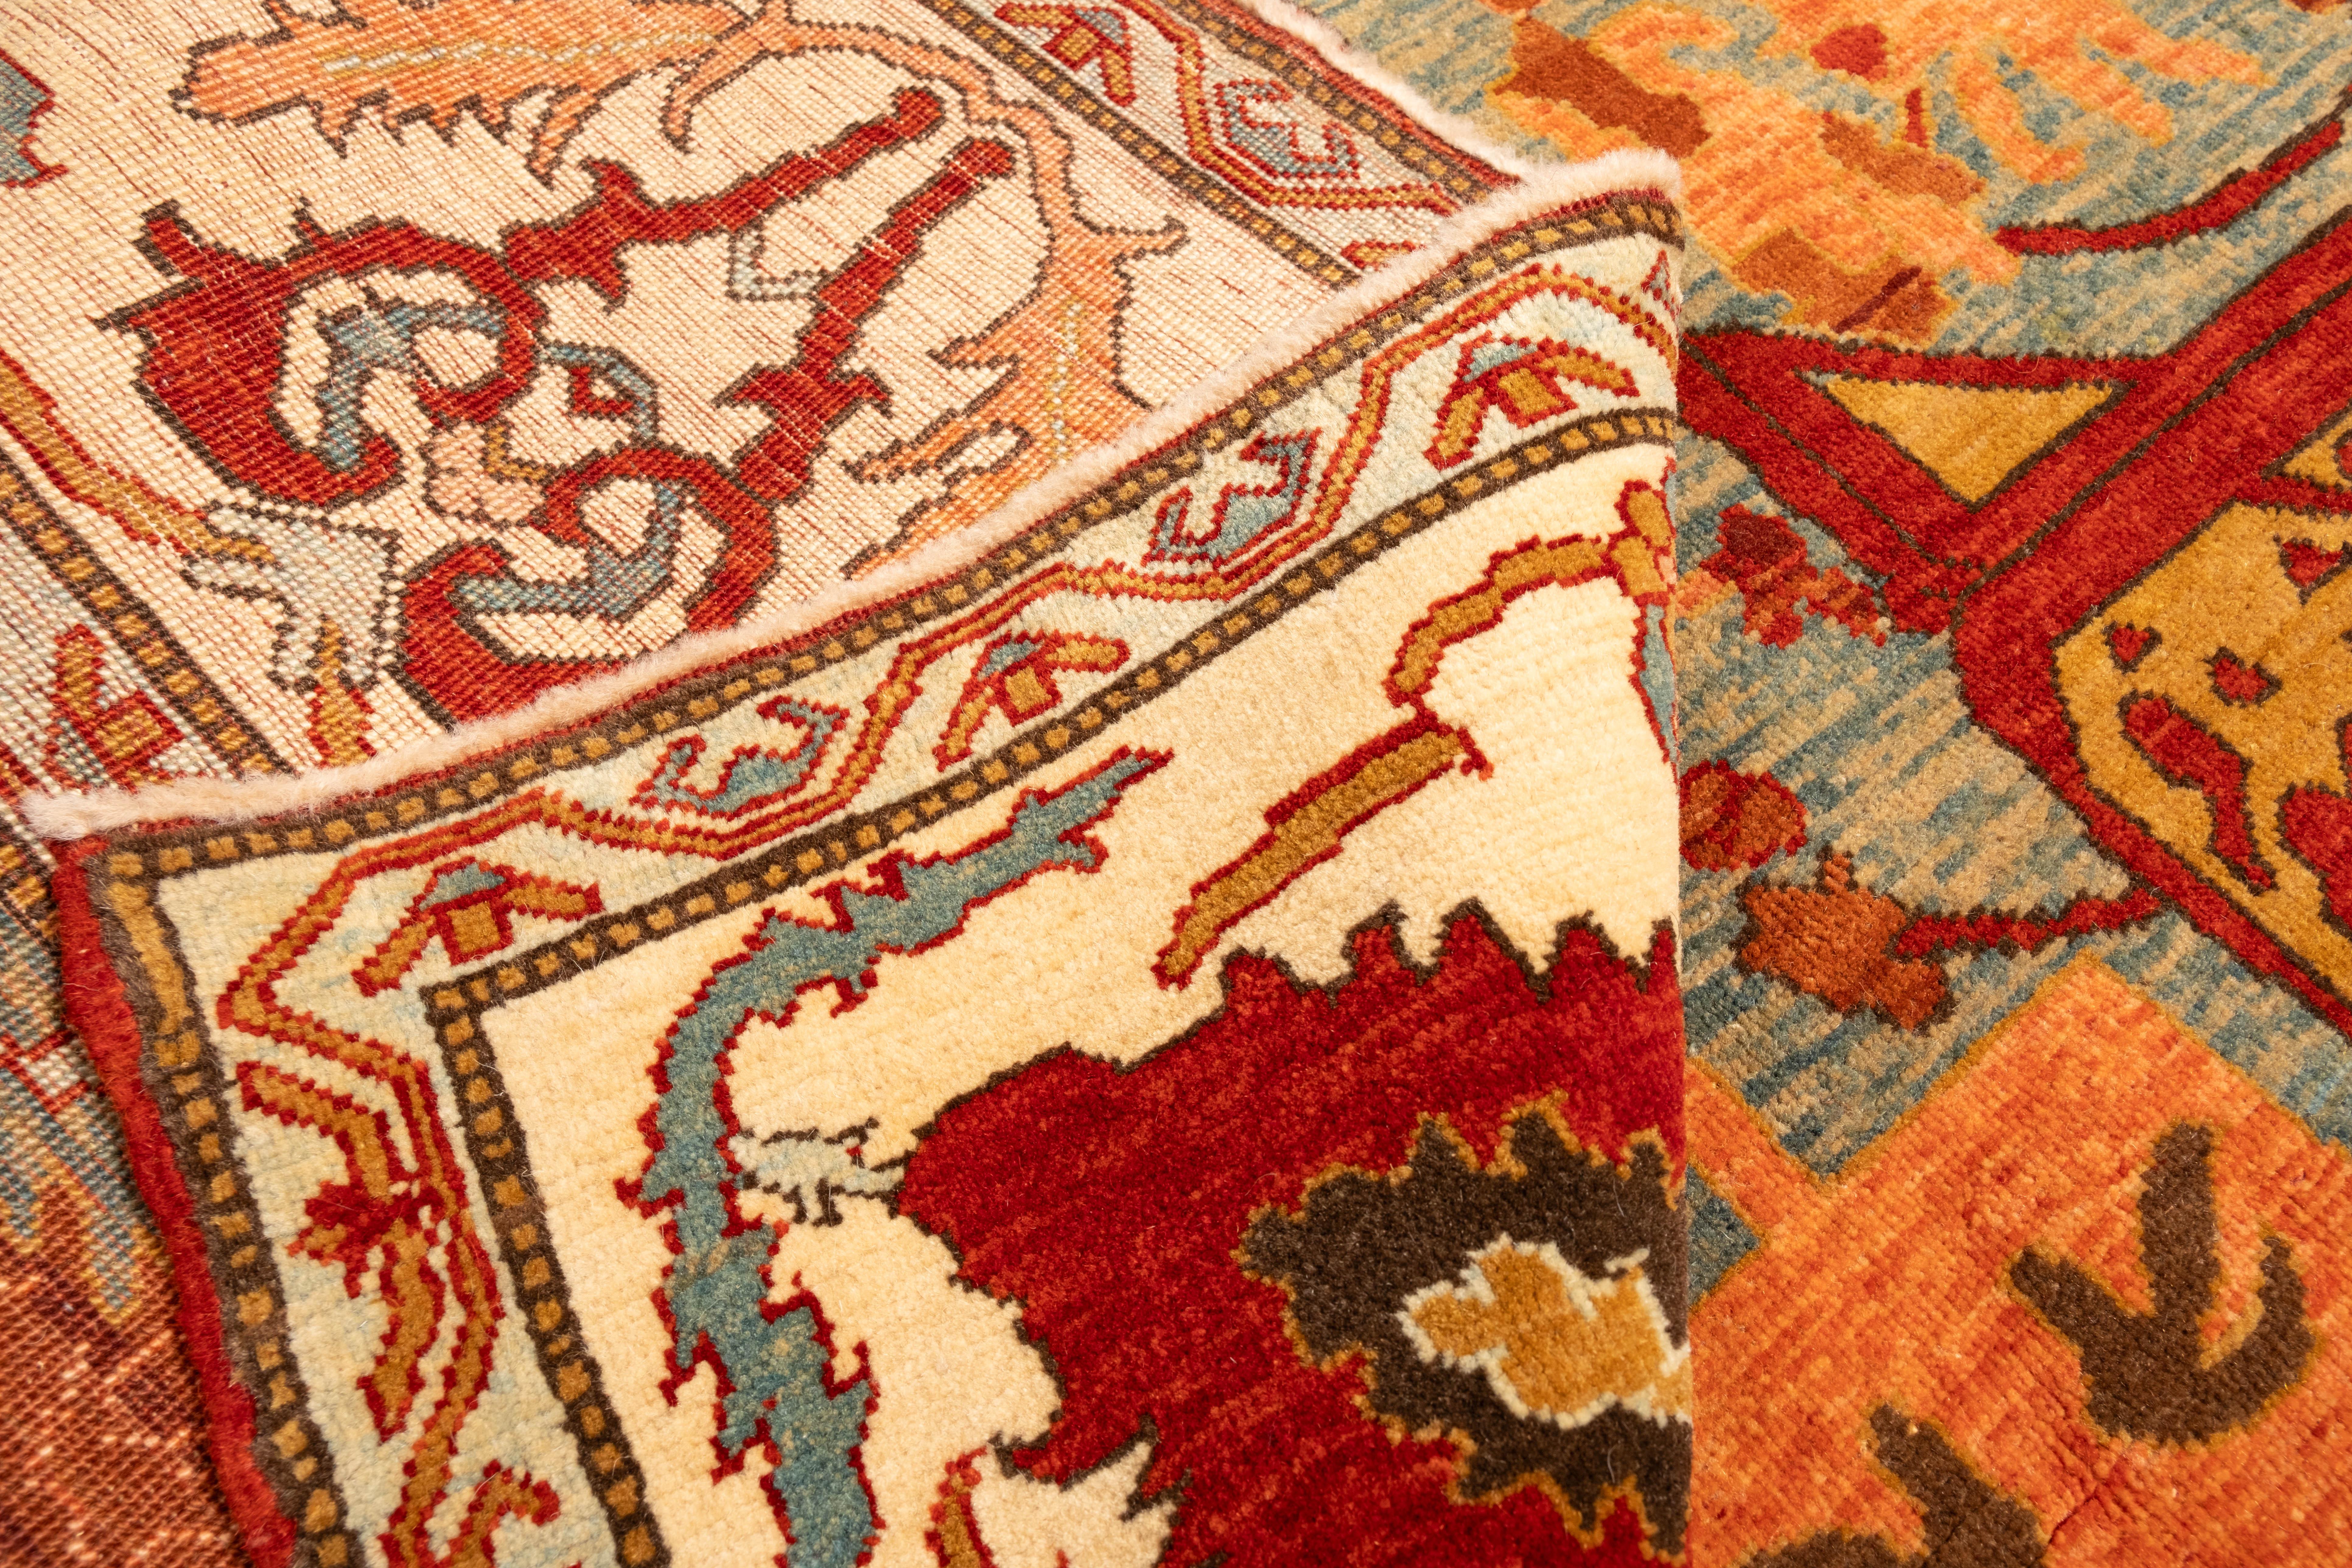 Turkish Ararat Rugs Gerous Arabesque Rug, Antique Persian Revival Carpet, Natural Dyed For Sale